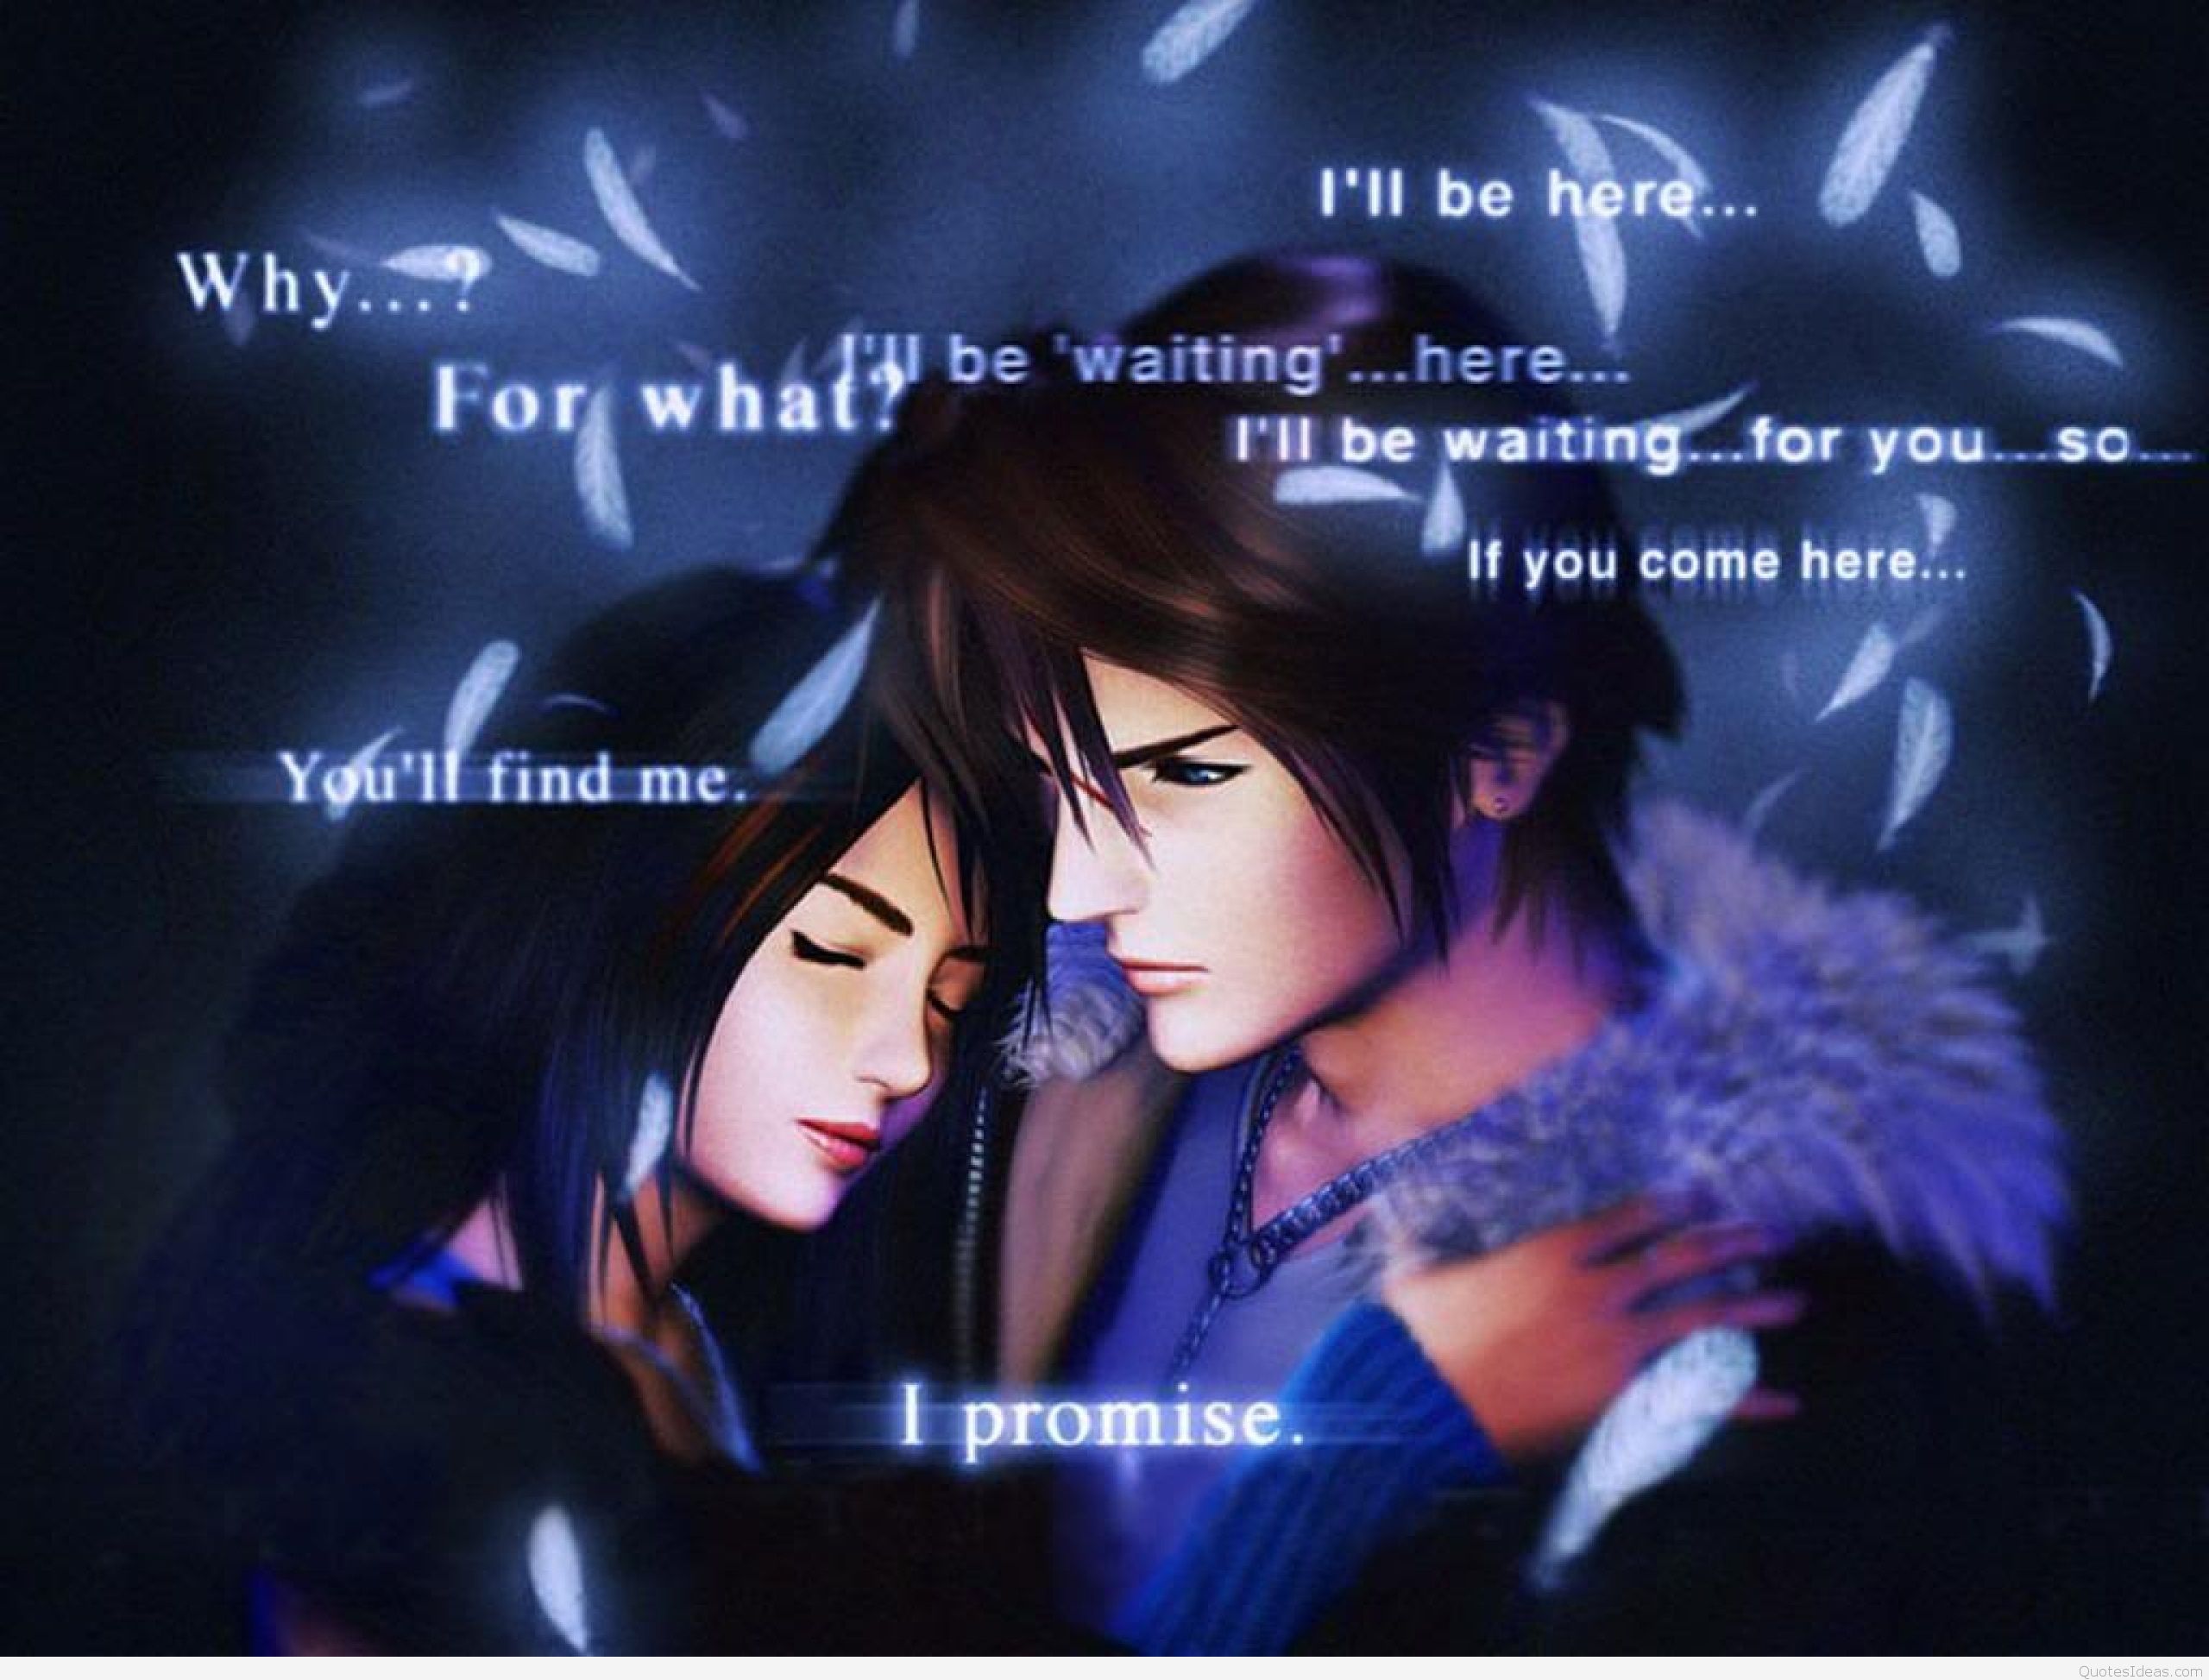 Cute Couple Anime Quotes - Final Fantasy 8 - 2560x1947 Wallpaper 